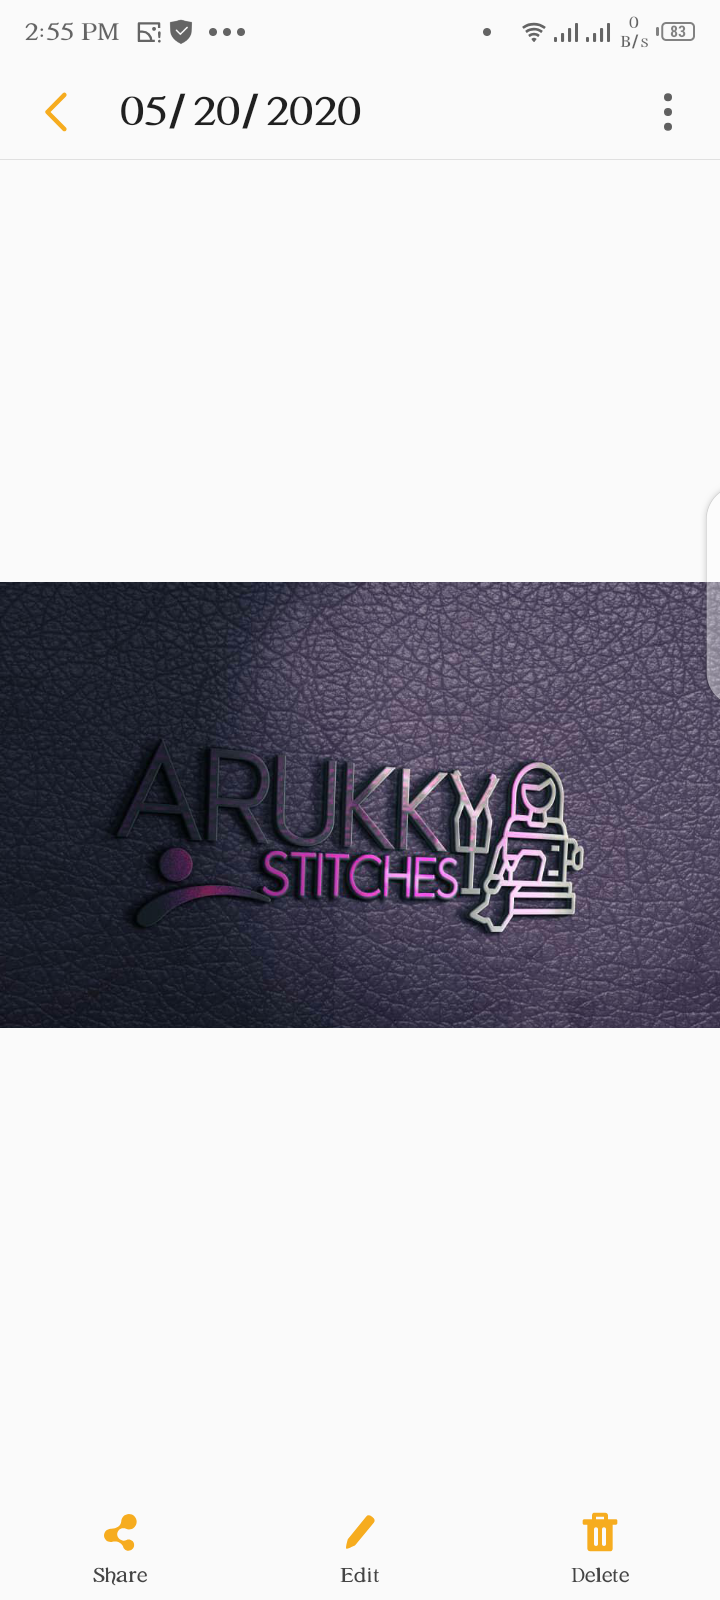 Arukky Stitches